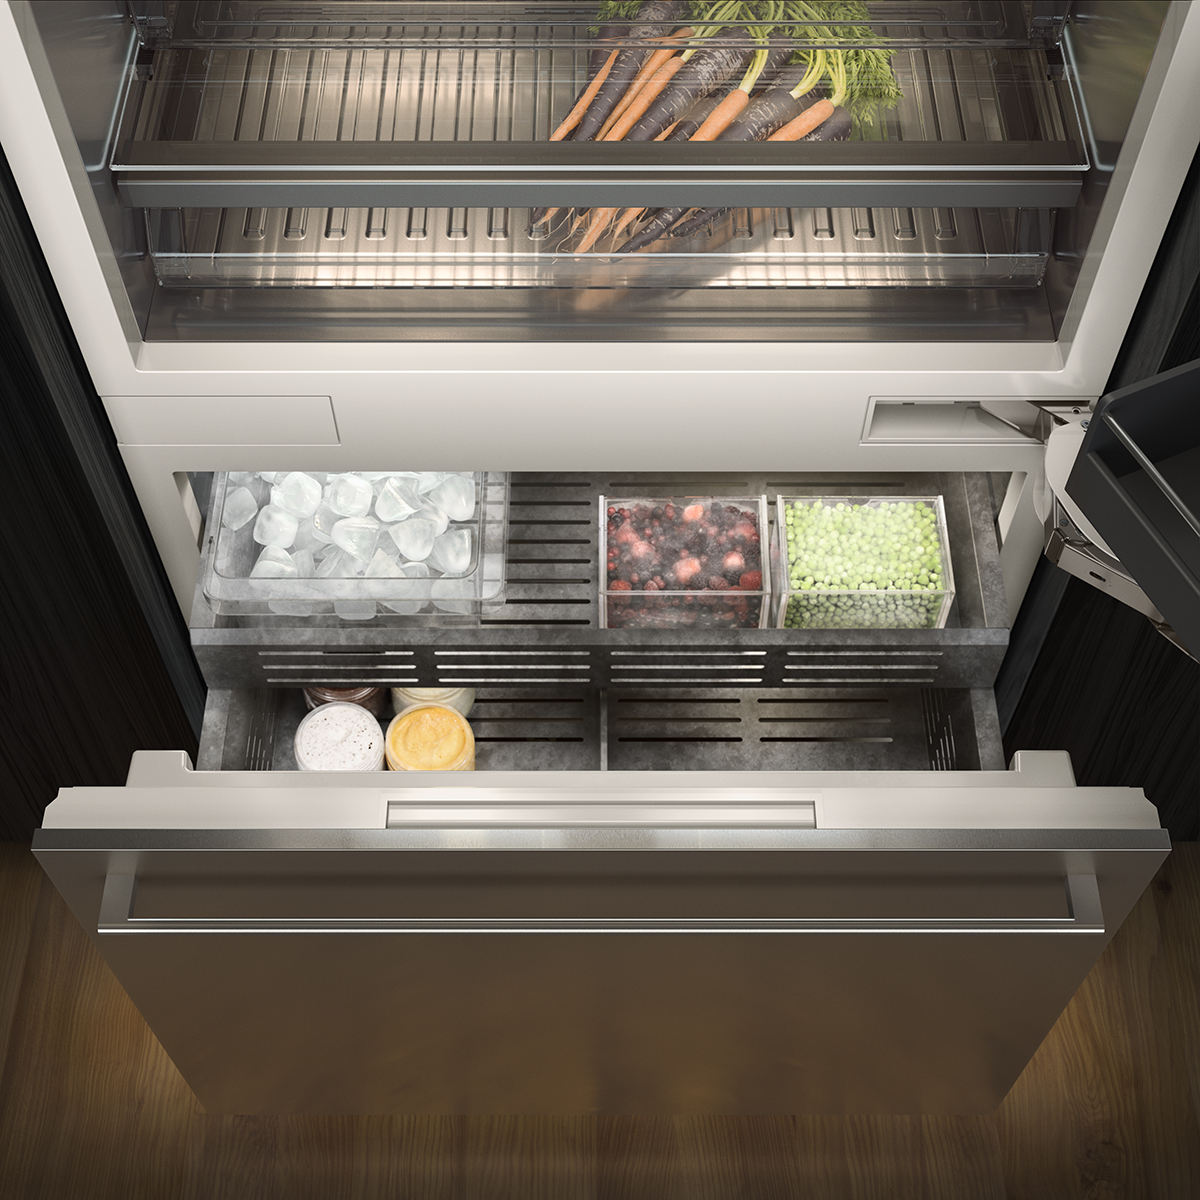 Modern refrigerator with bottom drawer open